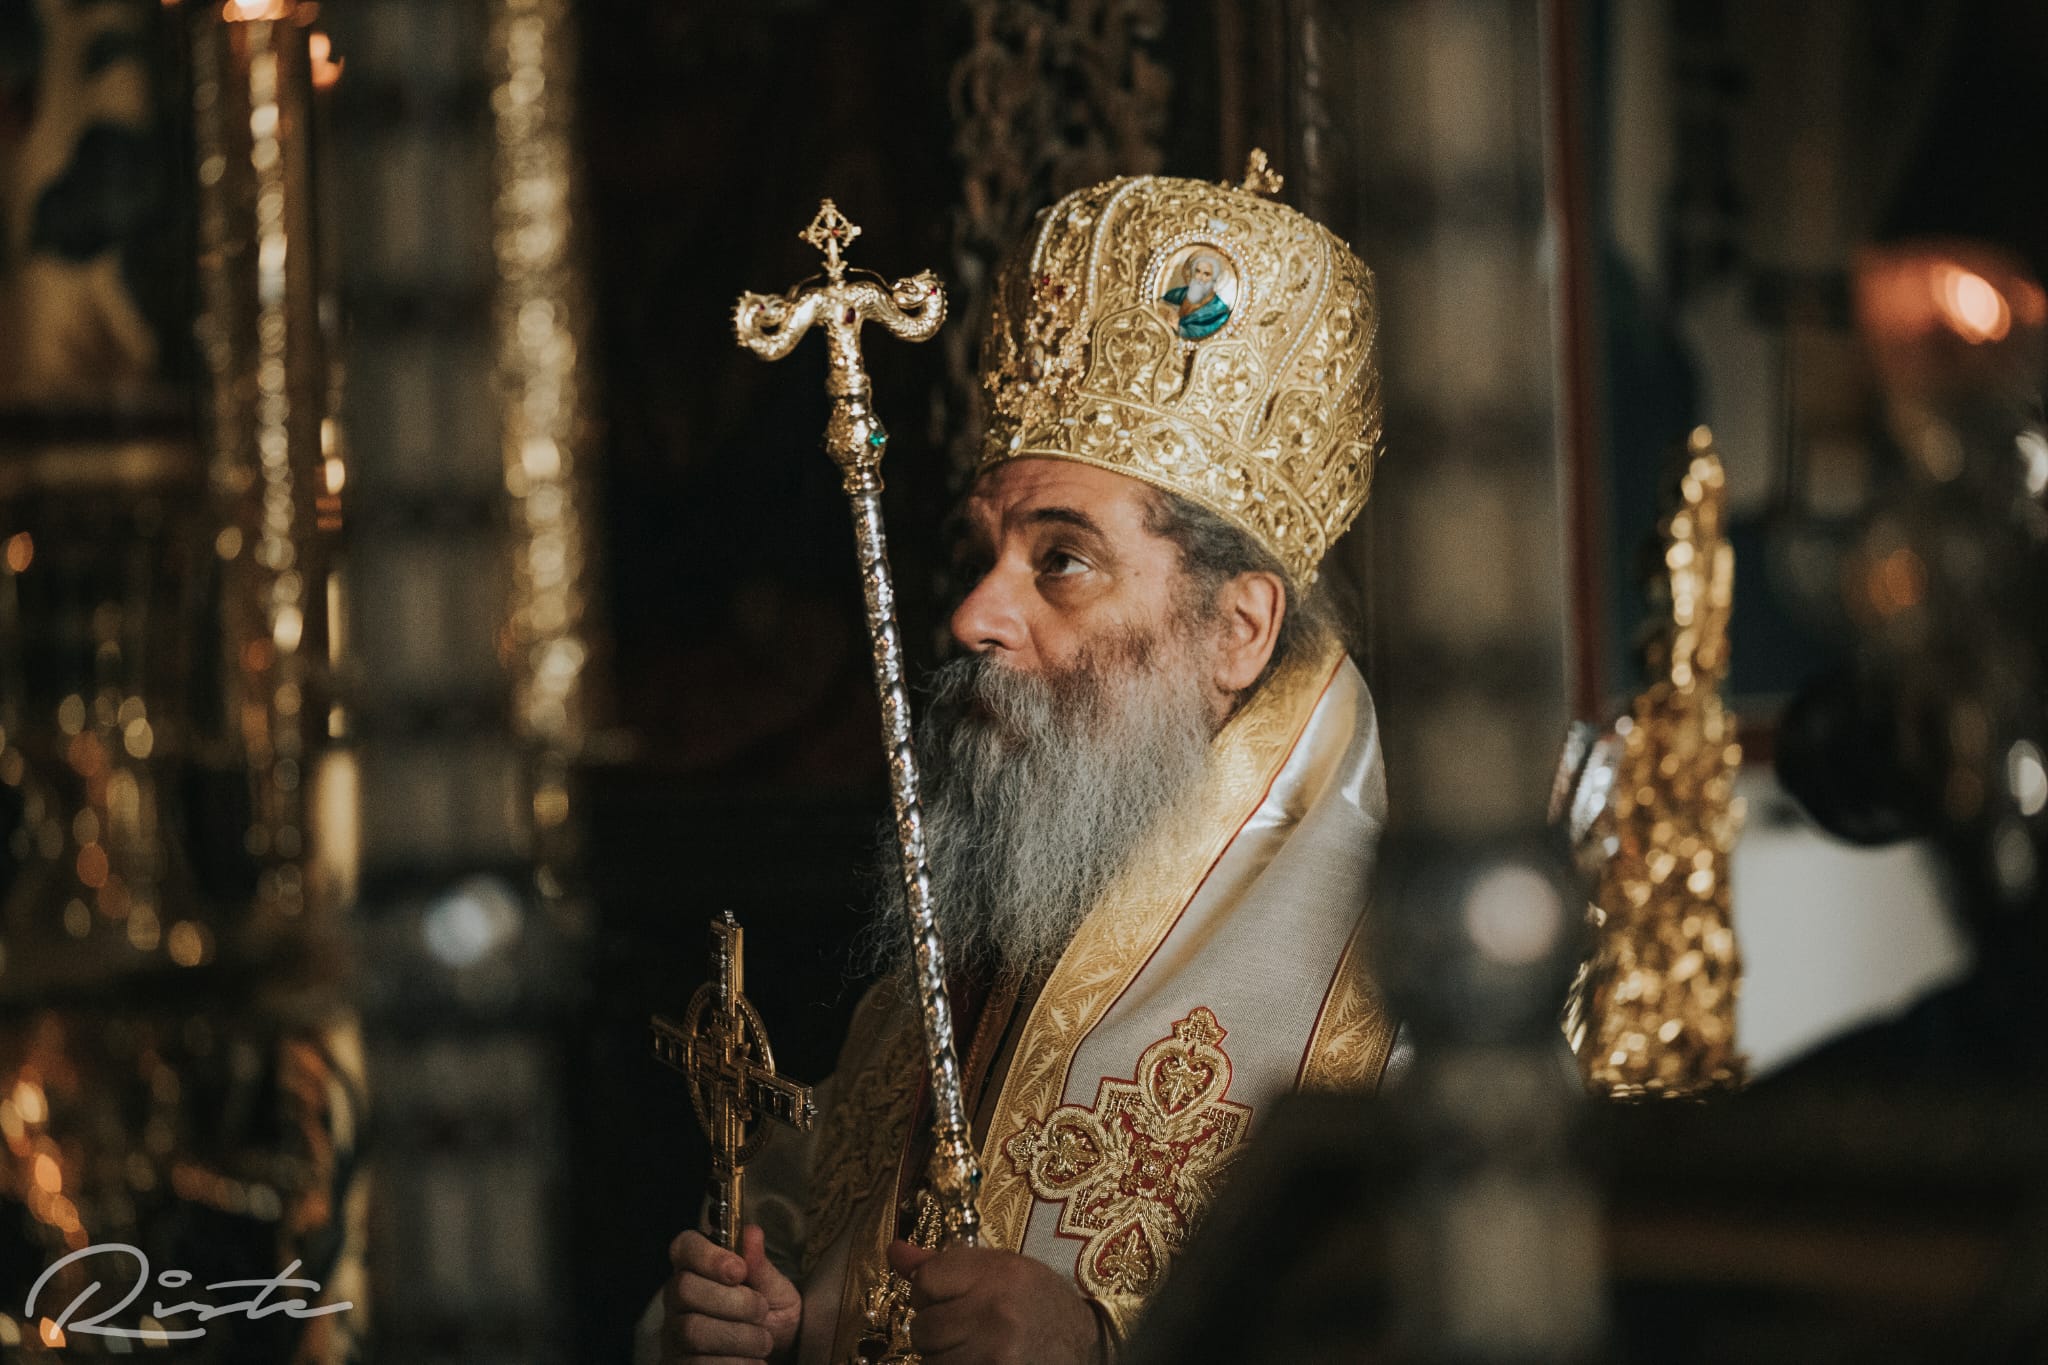 Bishop Parthenius, Elder and Abbot of the Bigorski Monastery